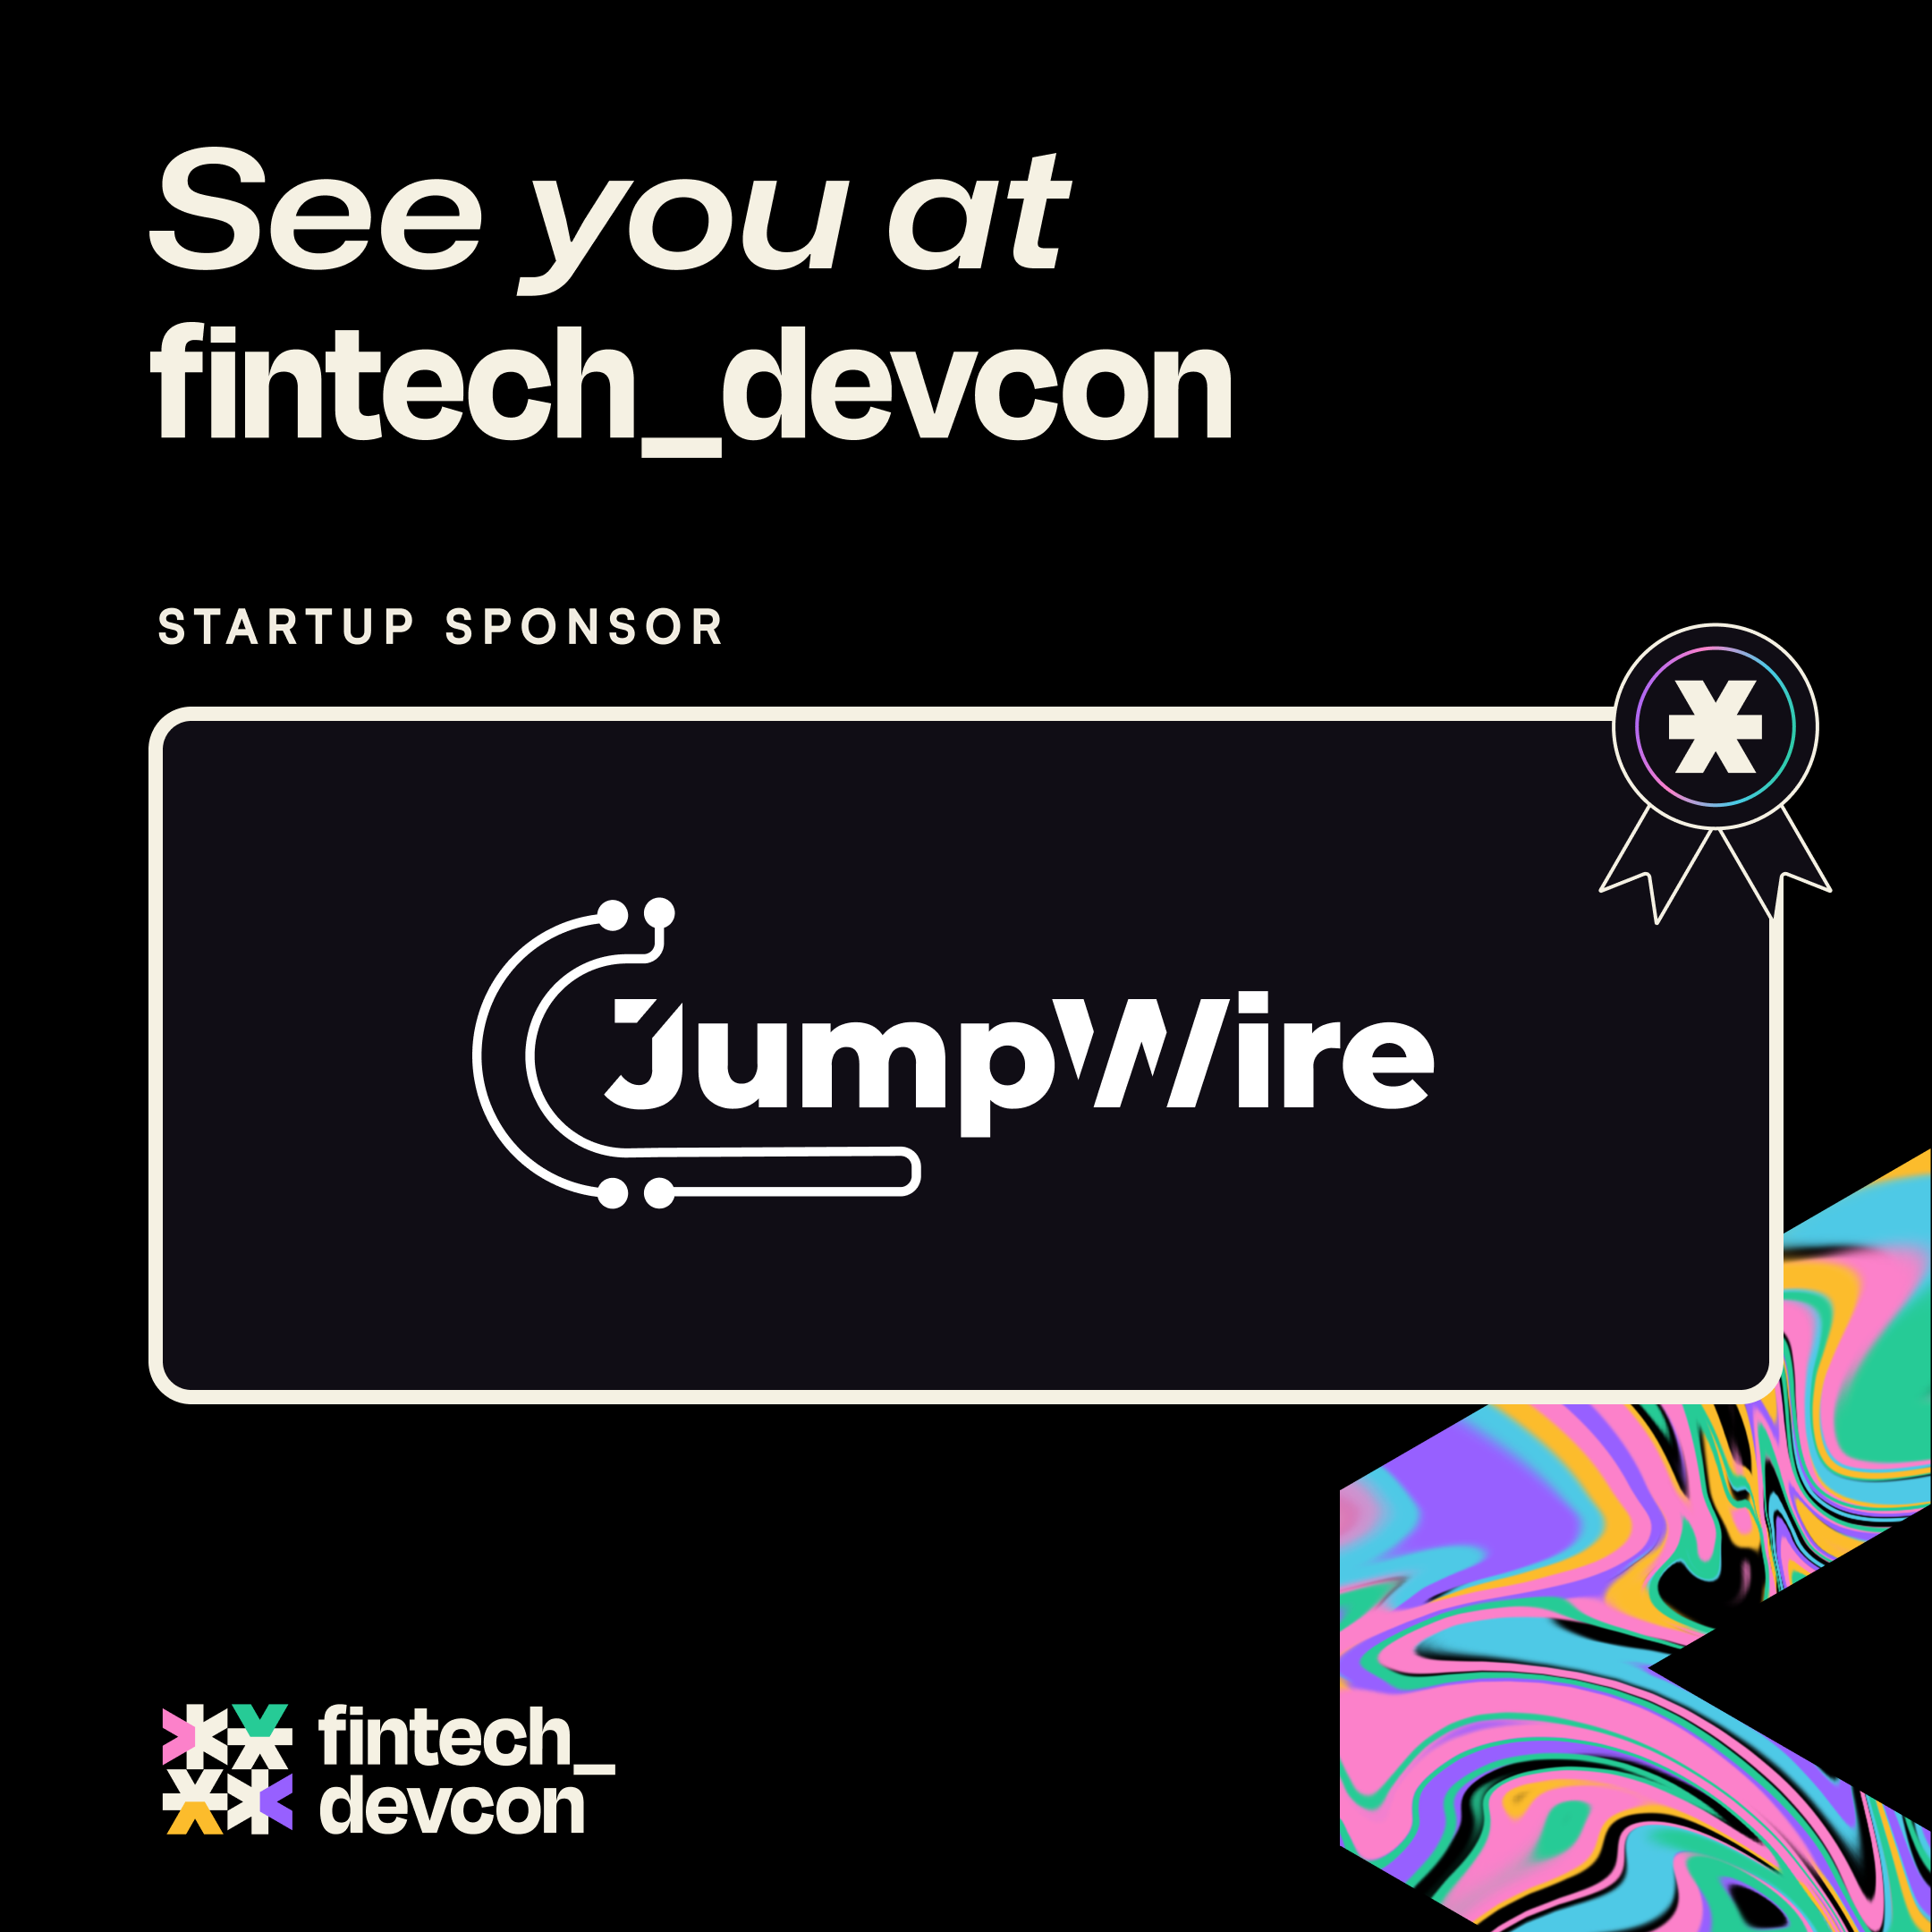 JumpWire is back at fintech_devcon